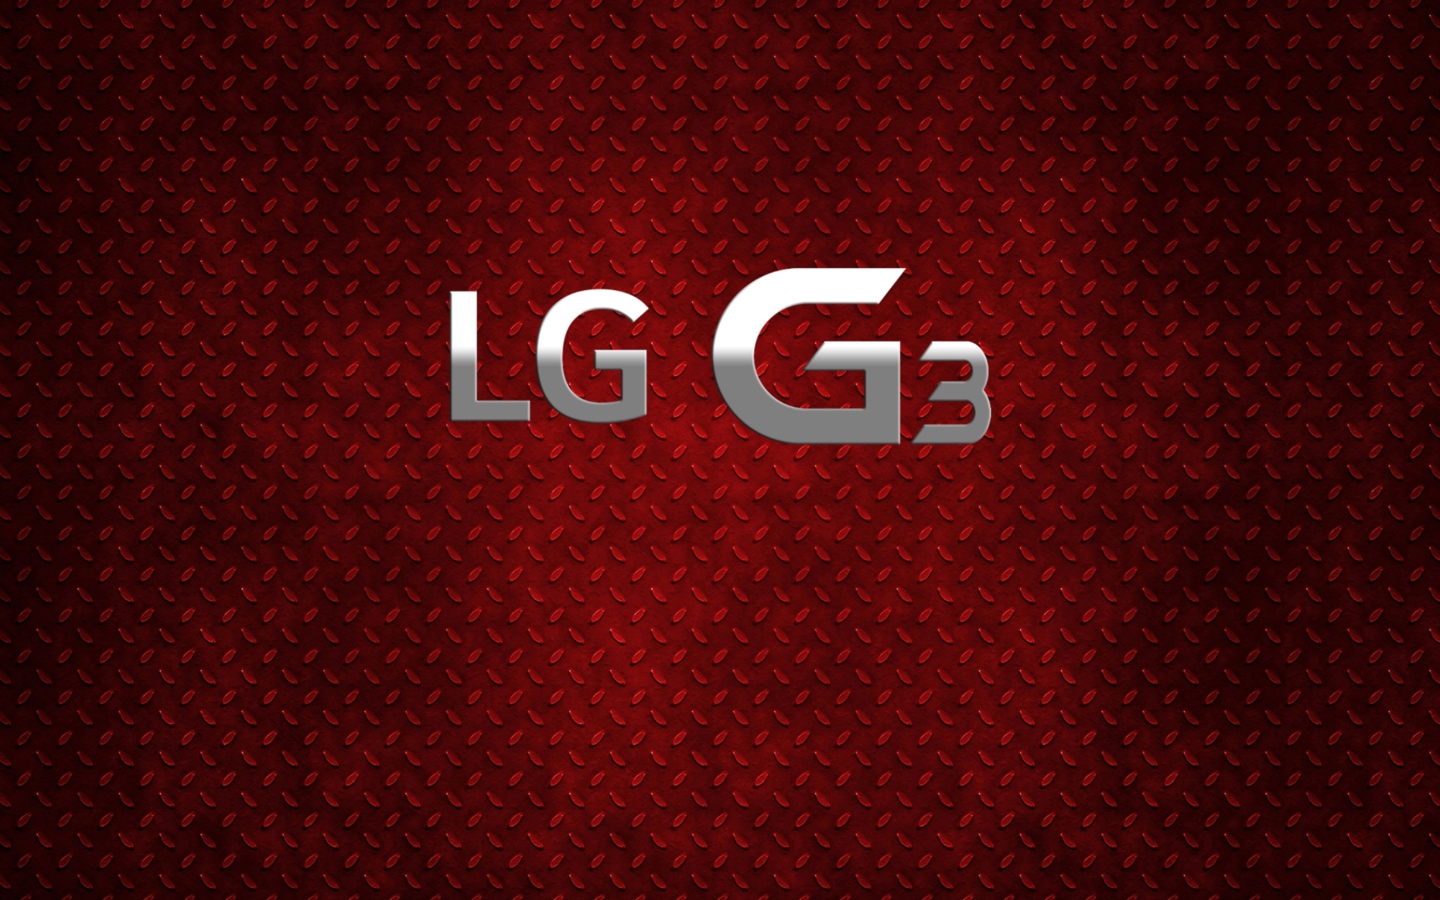 LG G3 wallpaper 1440x900